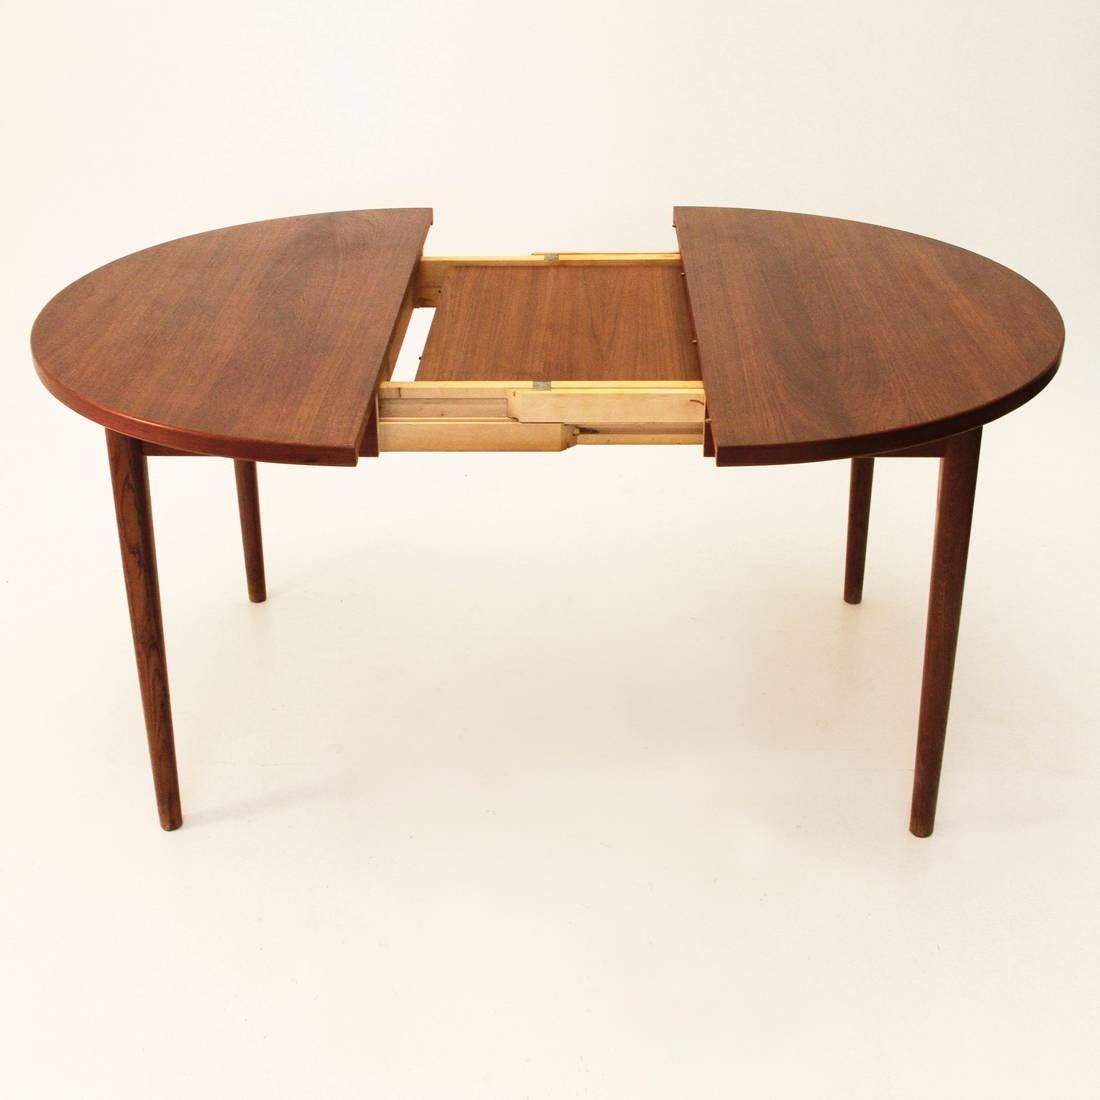 Mid-Century Modern Round Extendable Teak Table from Hugo Troeds, 1960s